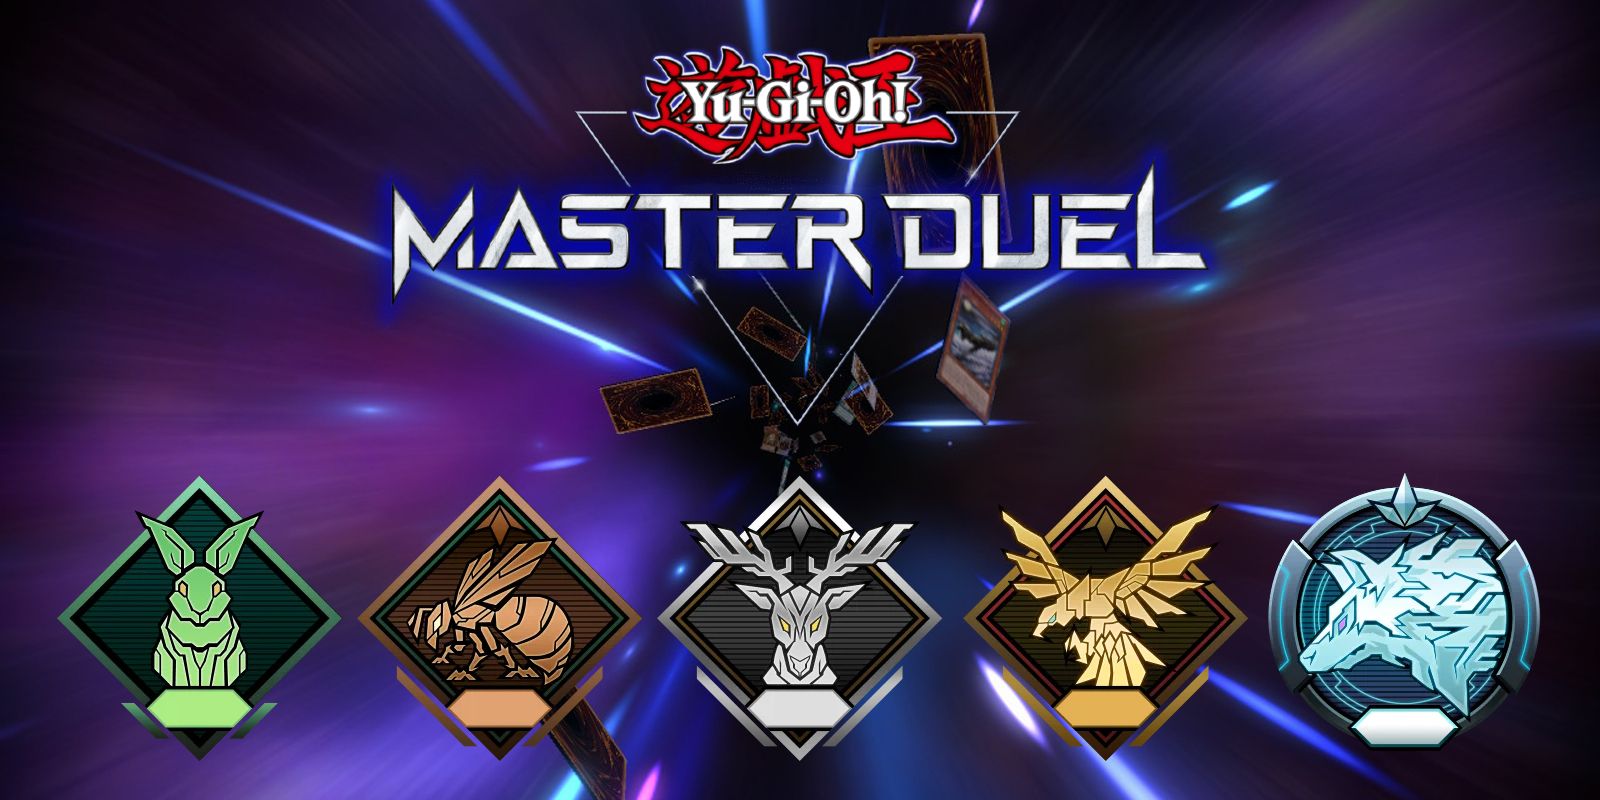 Master duel tier list